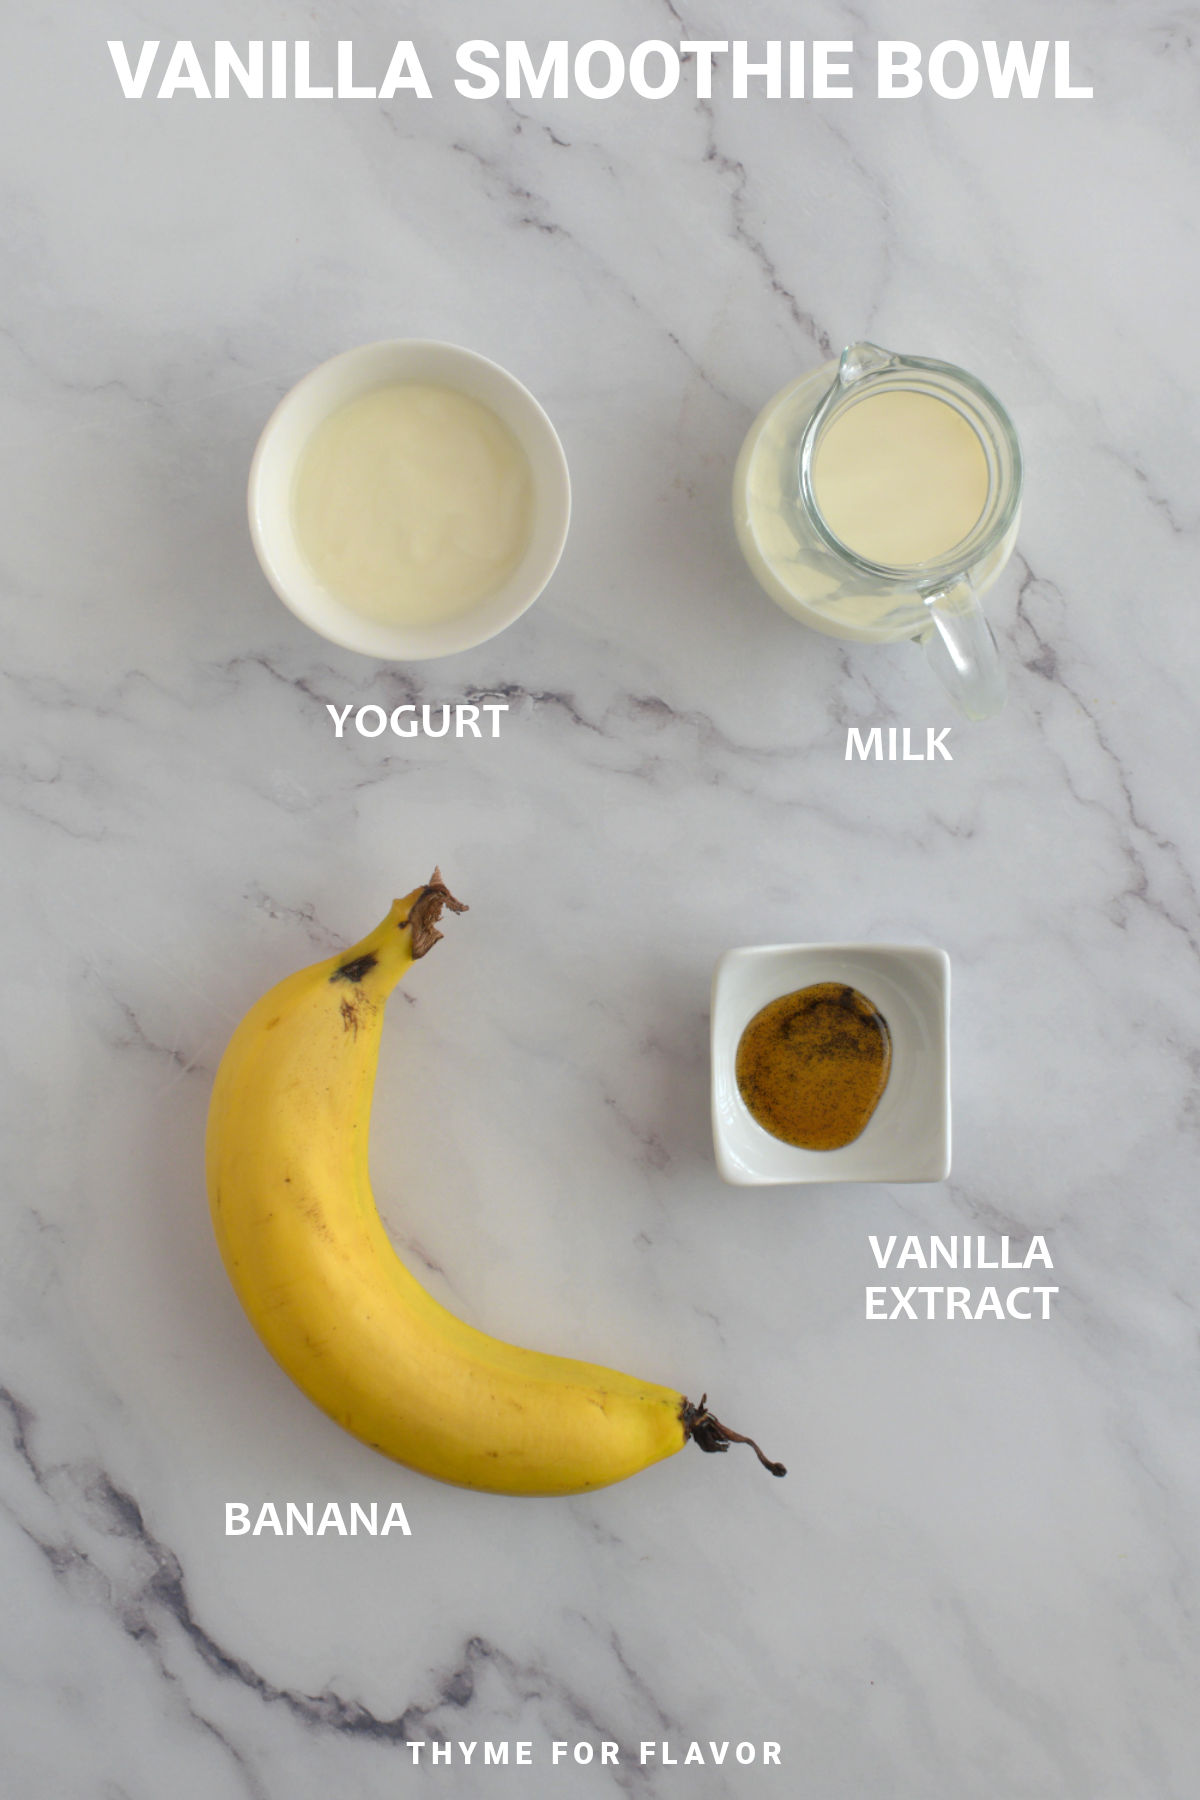 Ingredients for vanilla smoothie bowl.